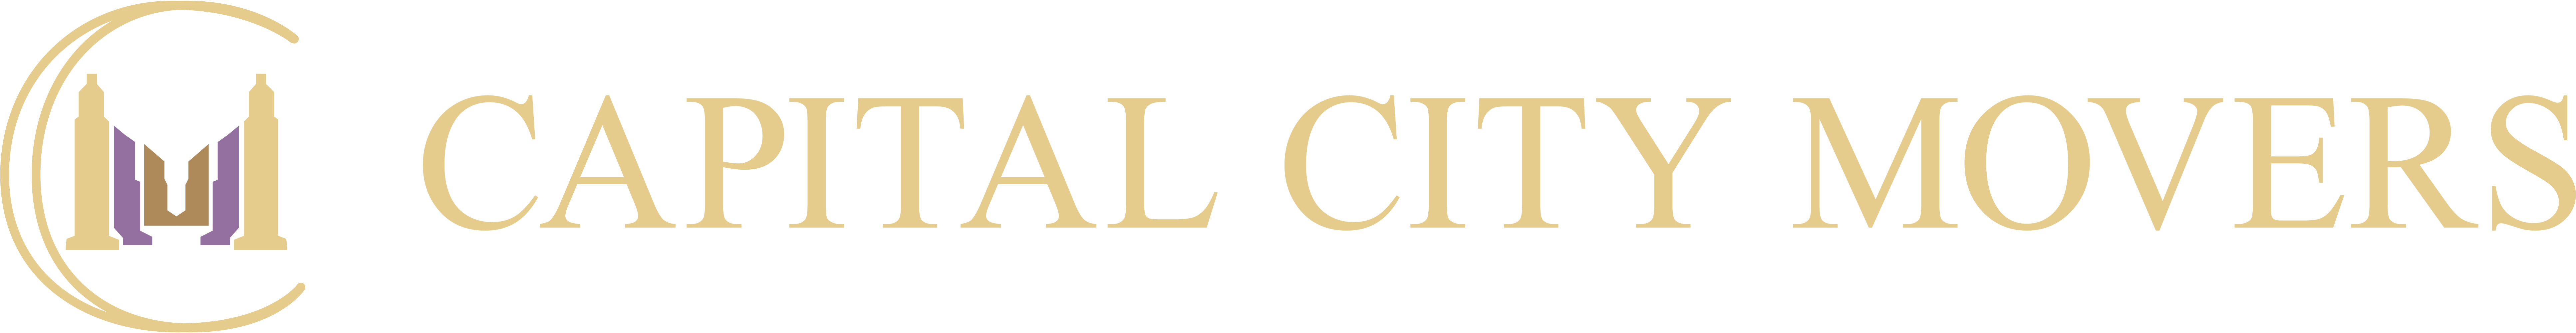 Capital City Movers & Storage Logo